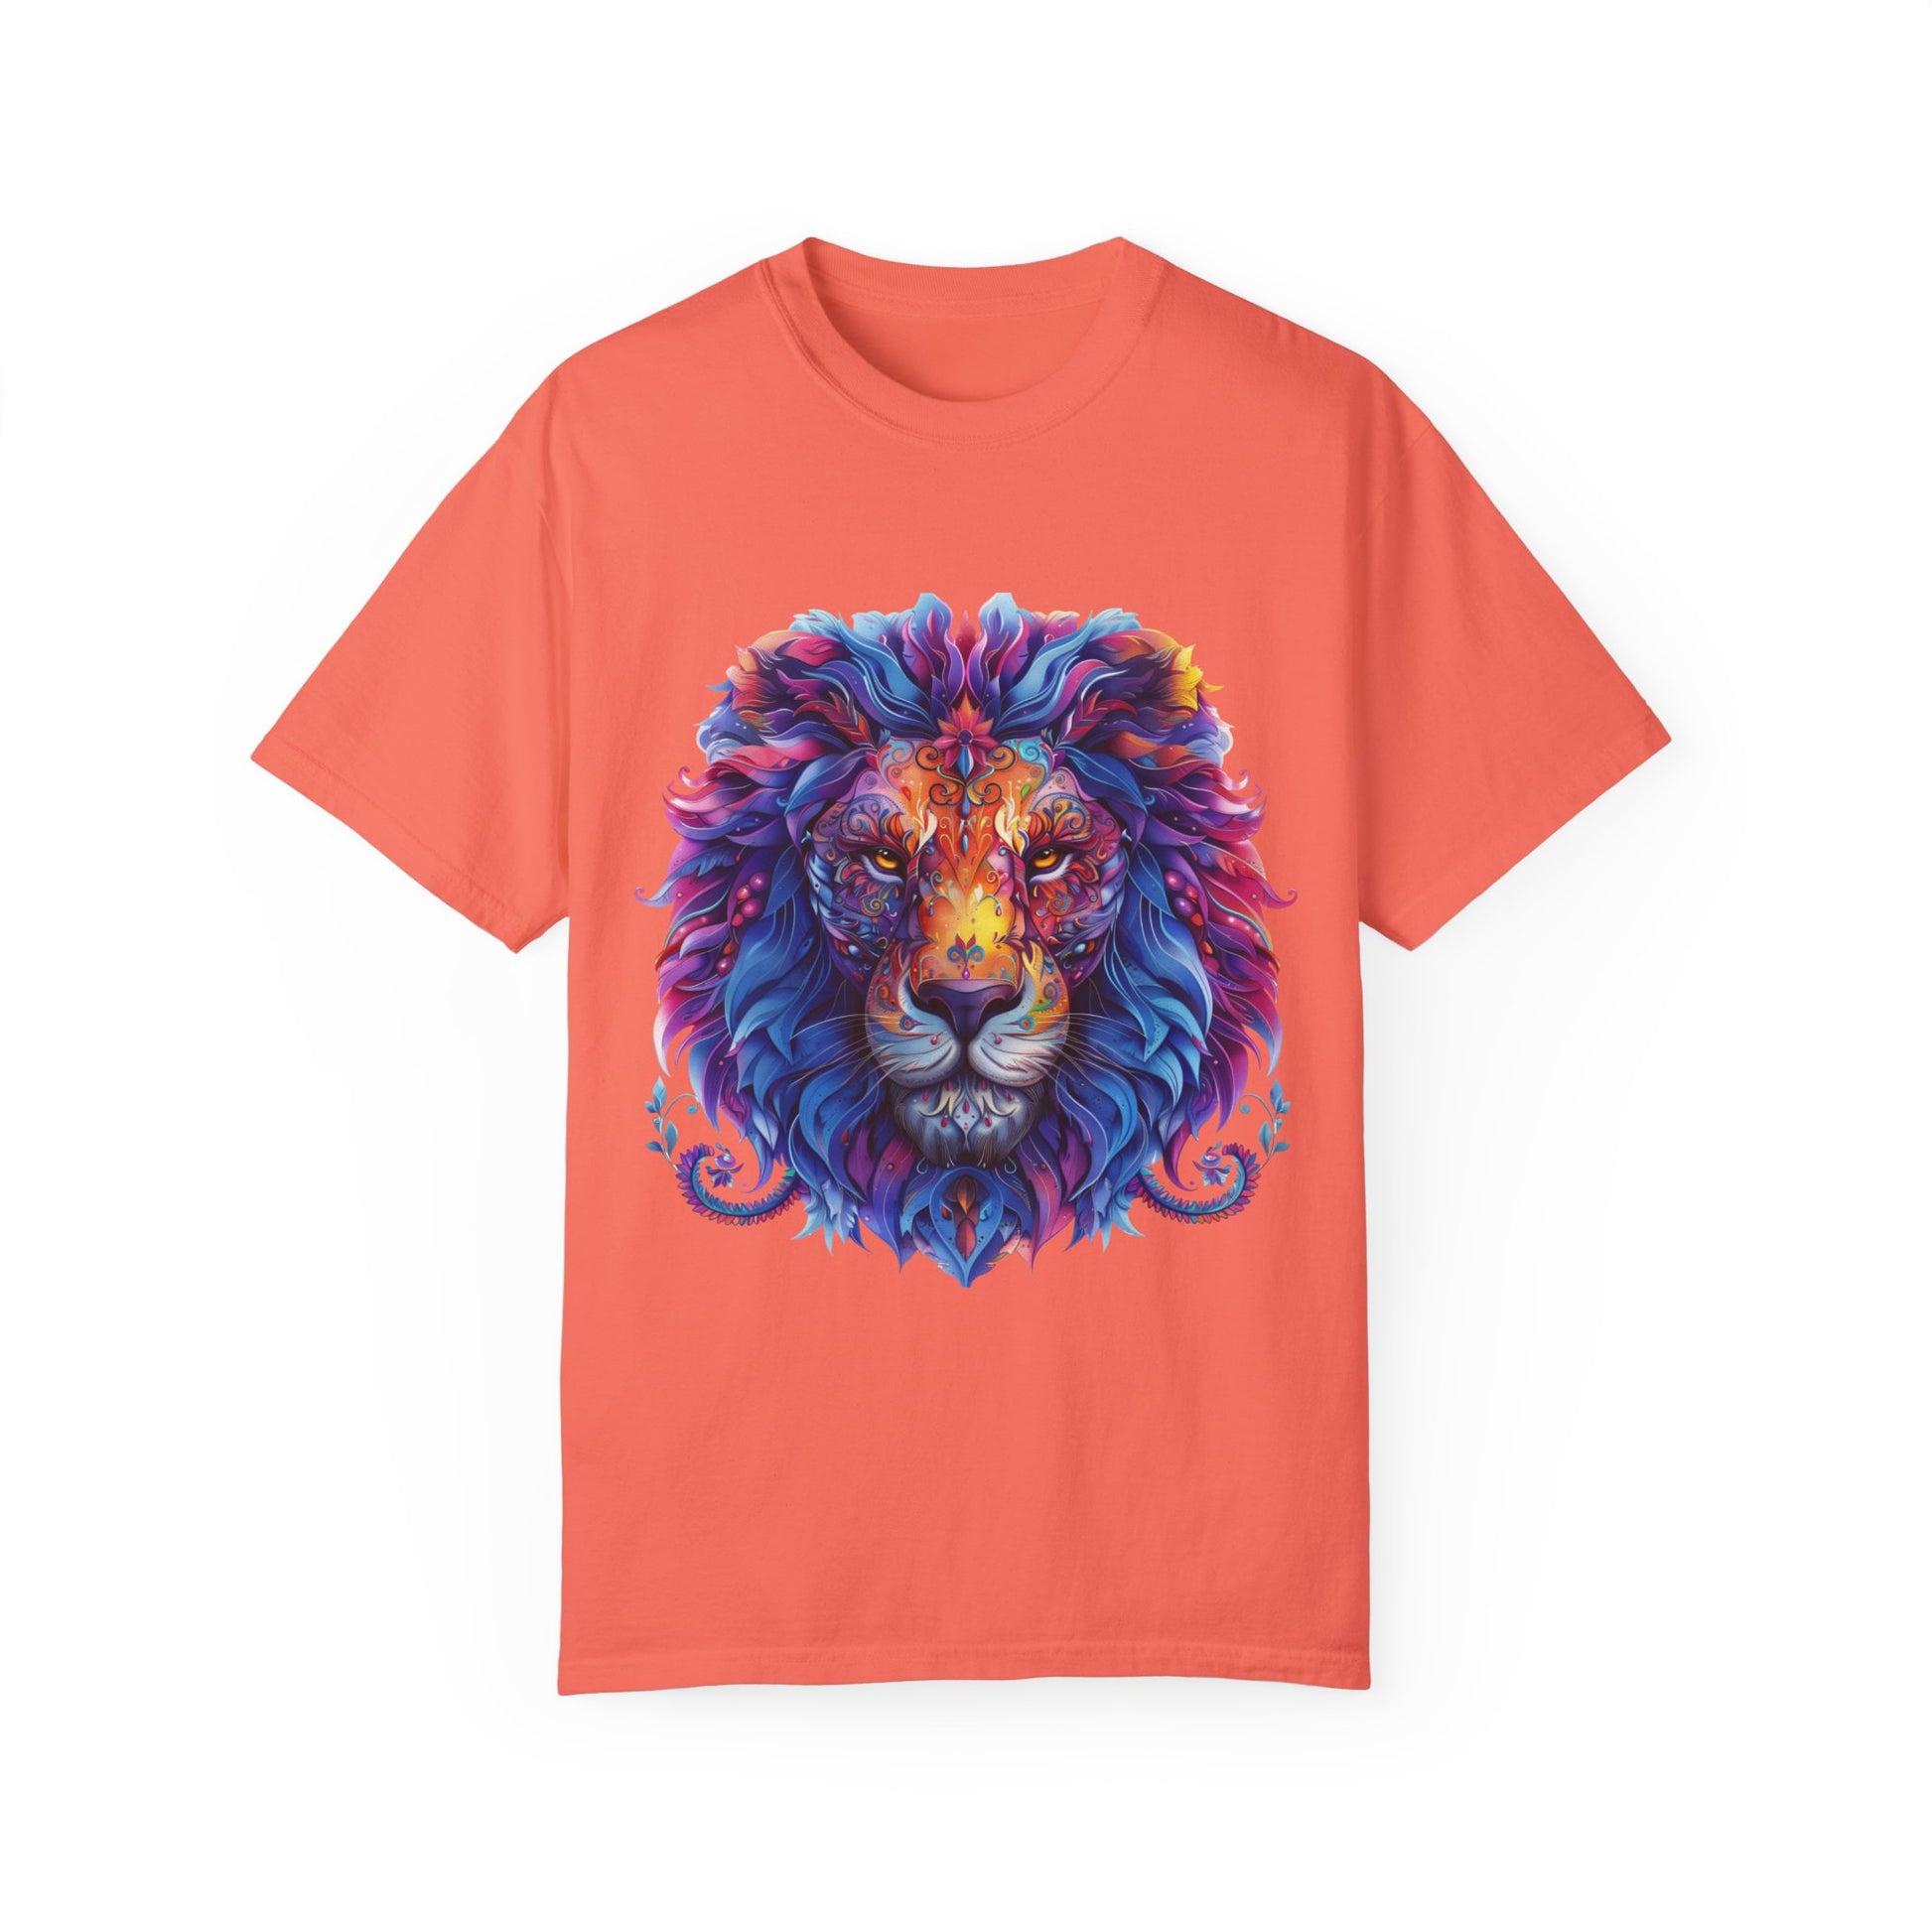 Lion Head Cool Graphic Design Novelty Unisex Garment-dyed T-shirt Cotton Funny Humorous Graphic Soft Premium Unisex Men Women Bright Salmon T-shirt Birthday Gift-6